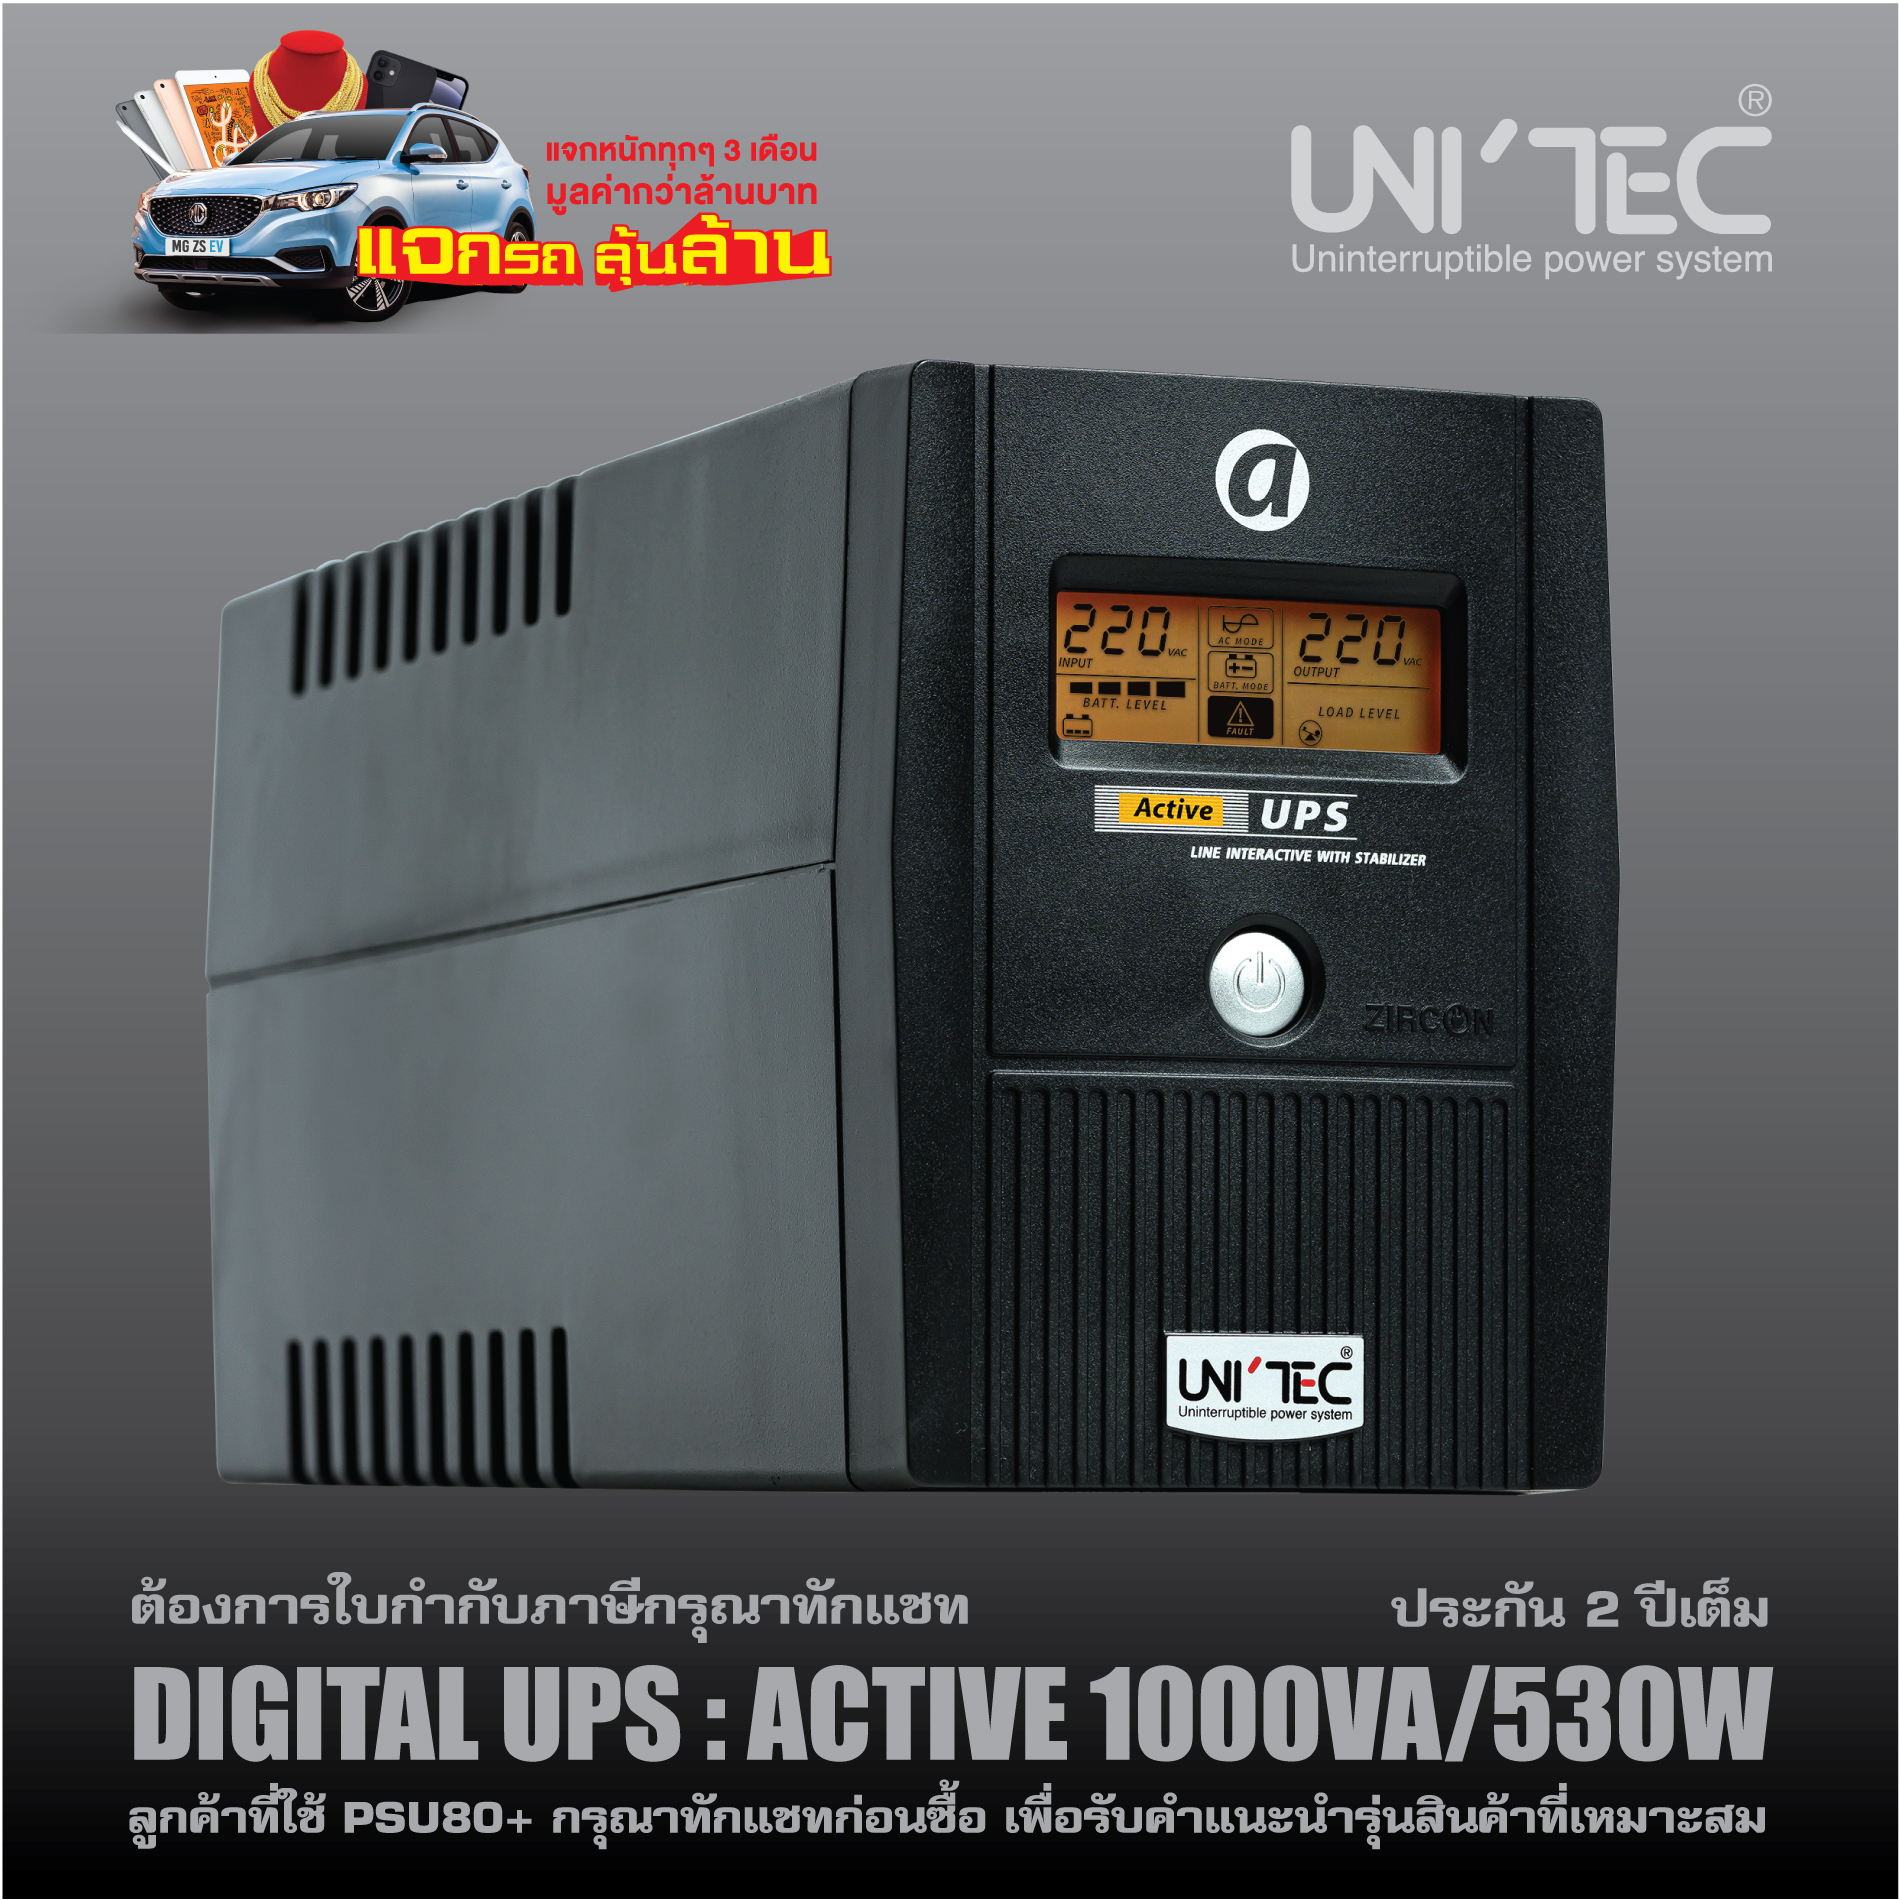 BiG-SALE! UNITEC-1000VA/530W-UPS ACTIVE1000 สินค้าล็อตใหม่ หน้าจอดิจิทัล ประกัน 2 ปี